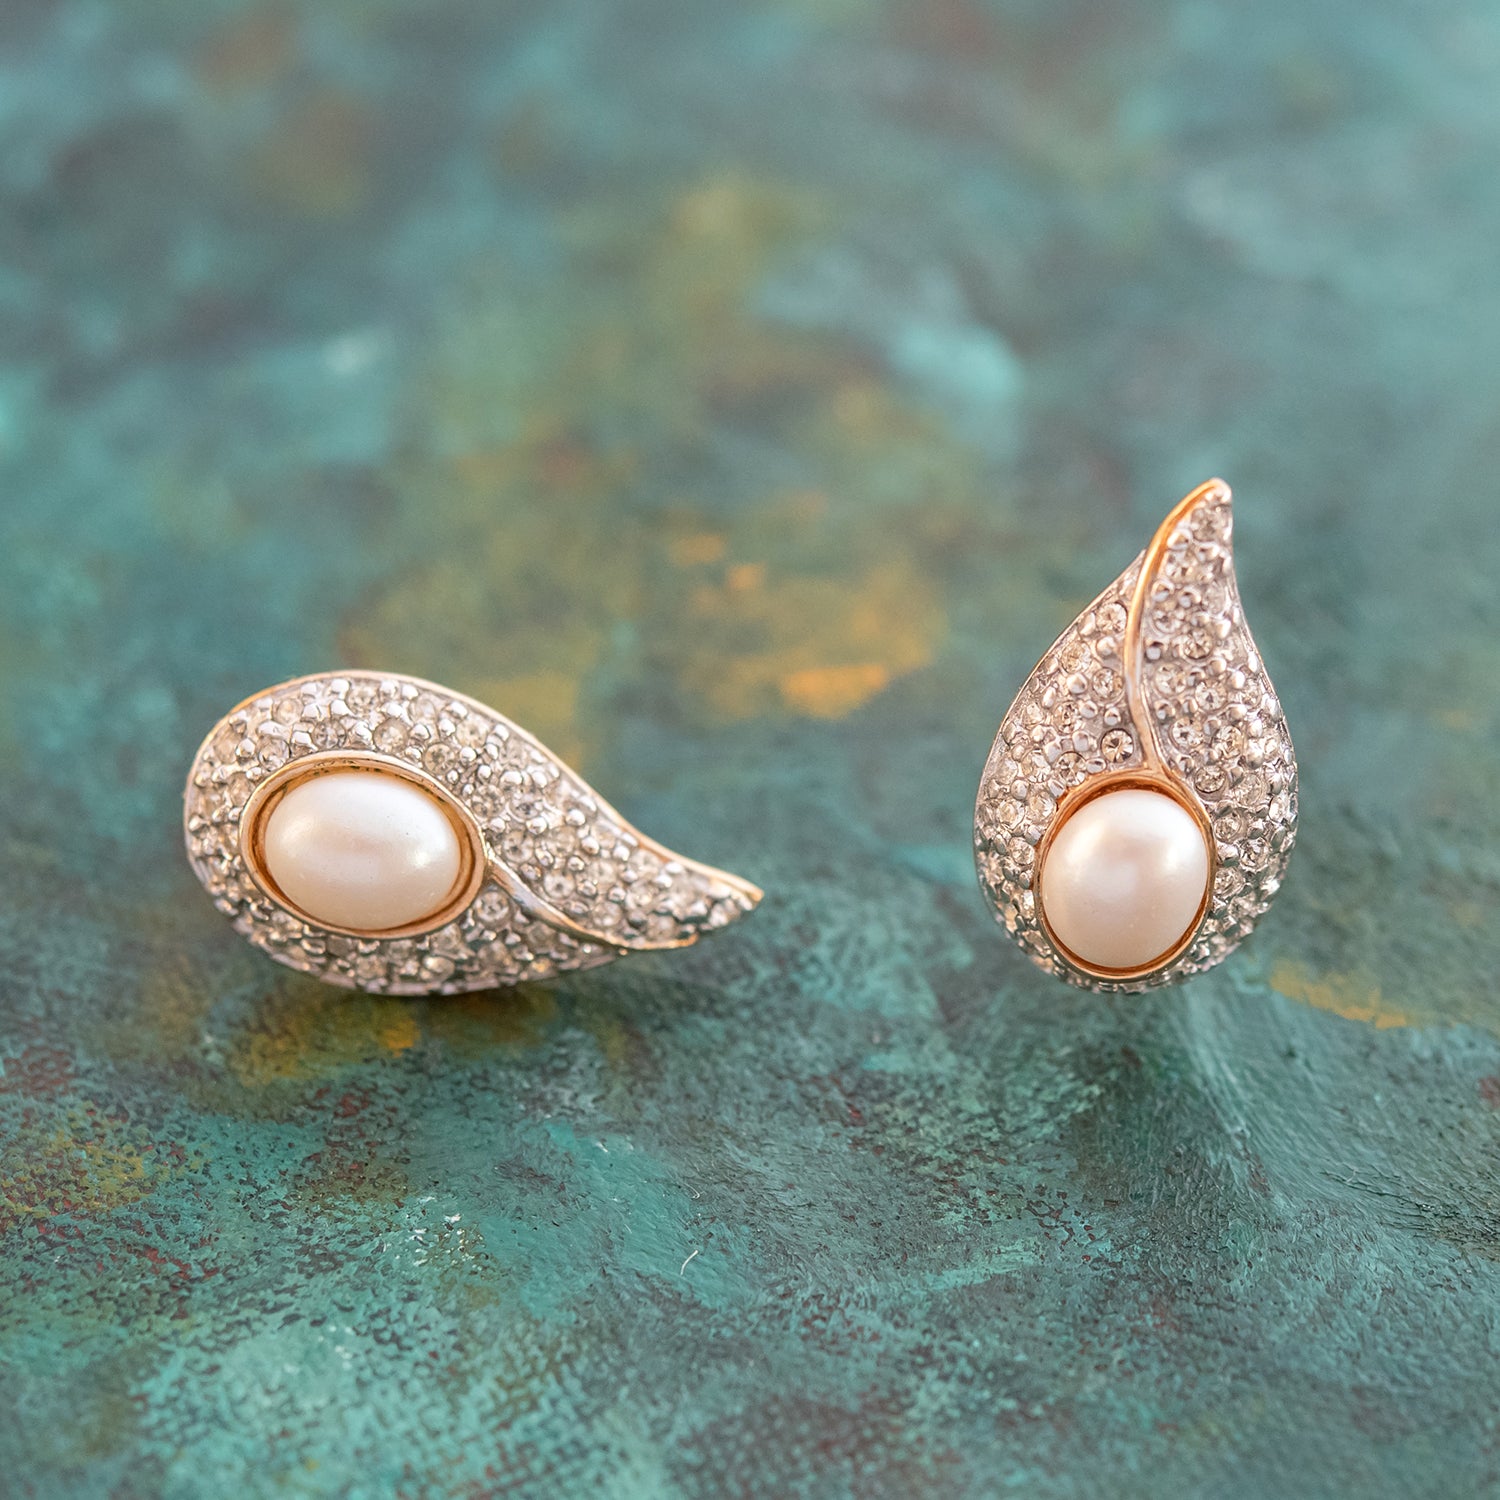 G7 jewellers 9206205060 | Pearl earrings designs, Gold earrings for kids,  Small earrings gold